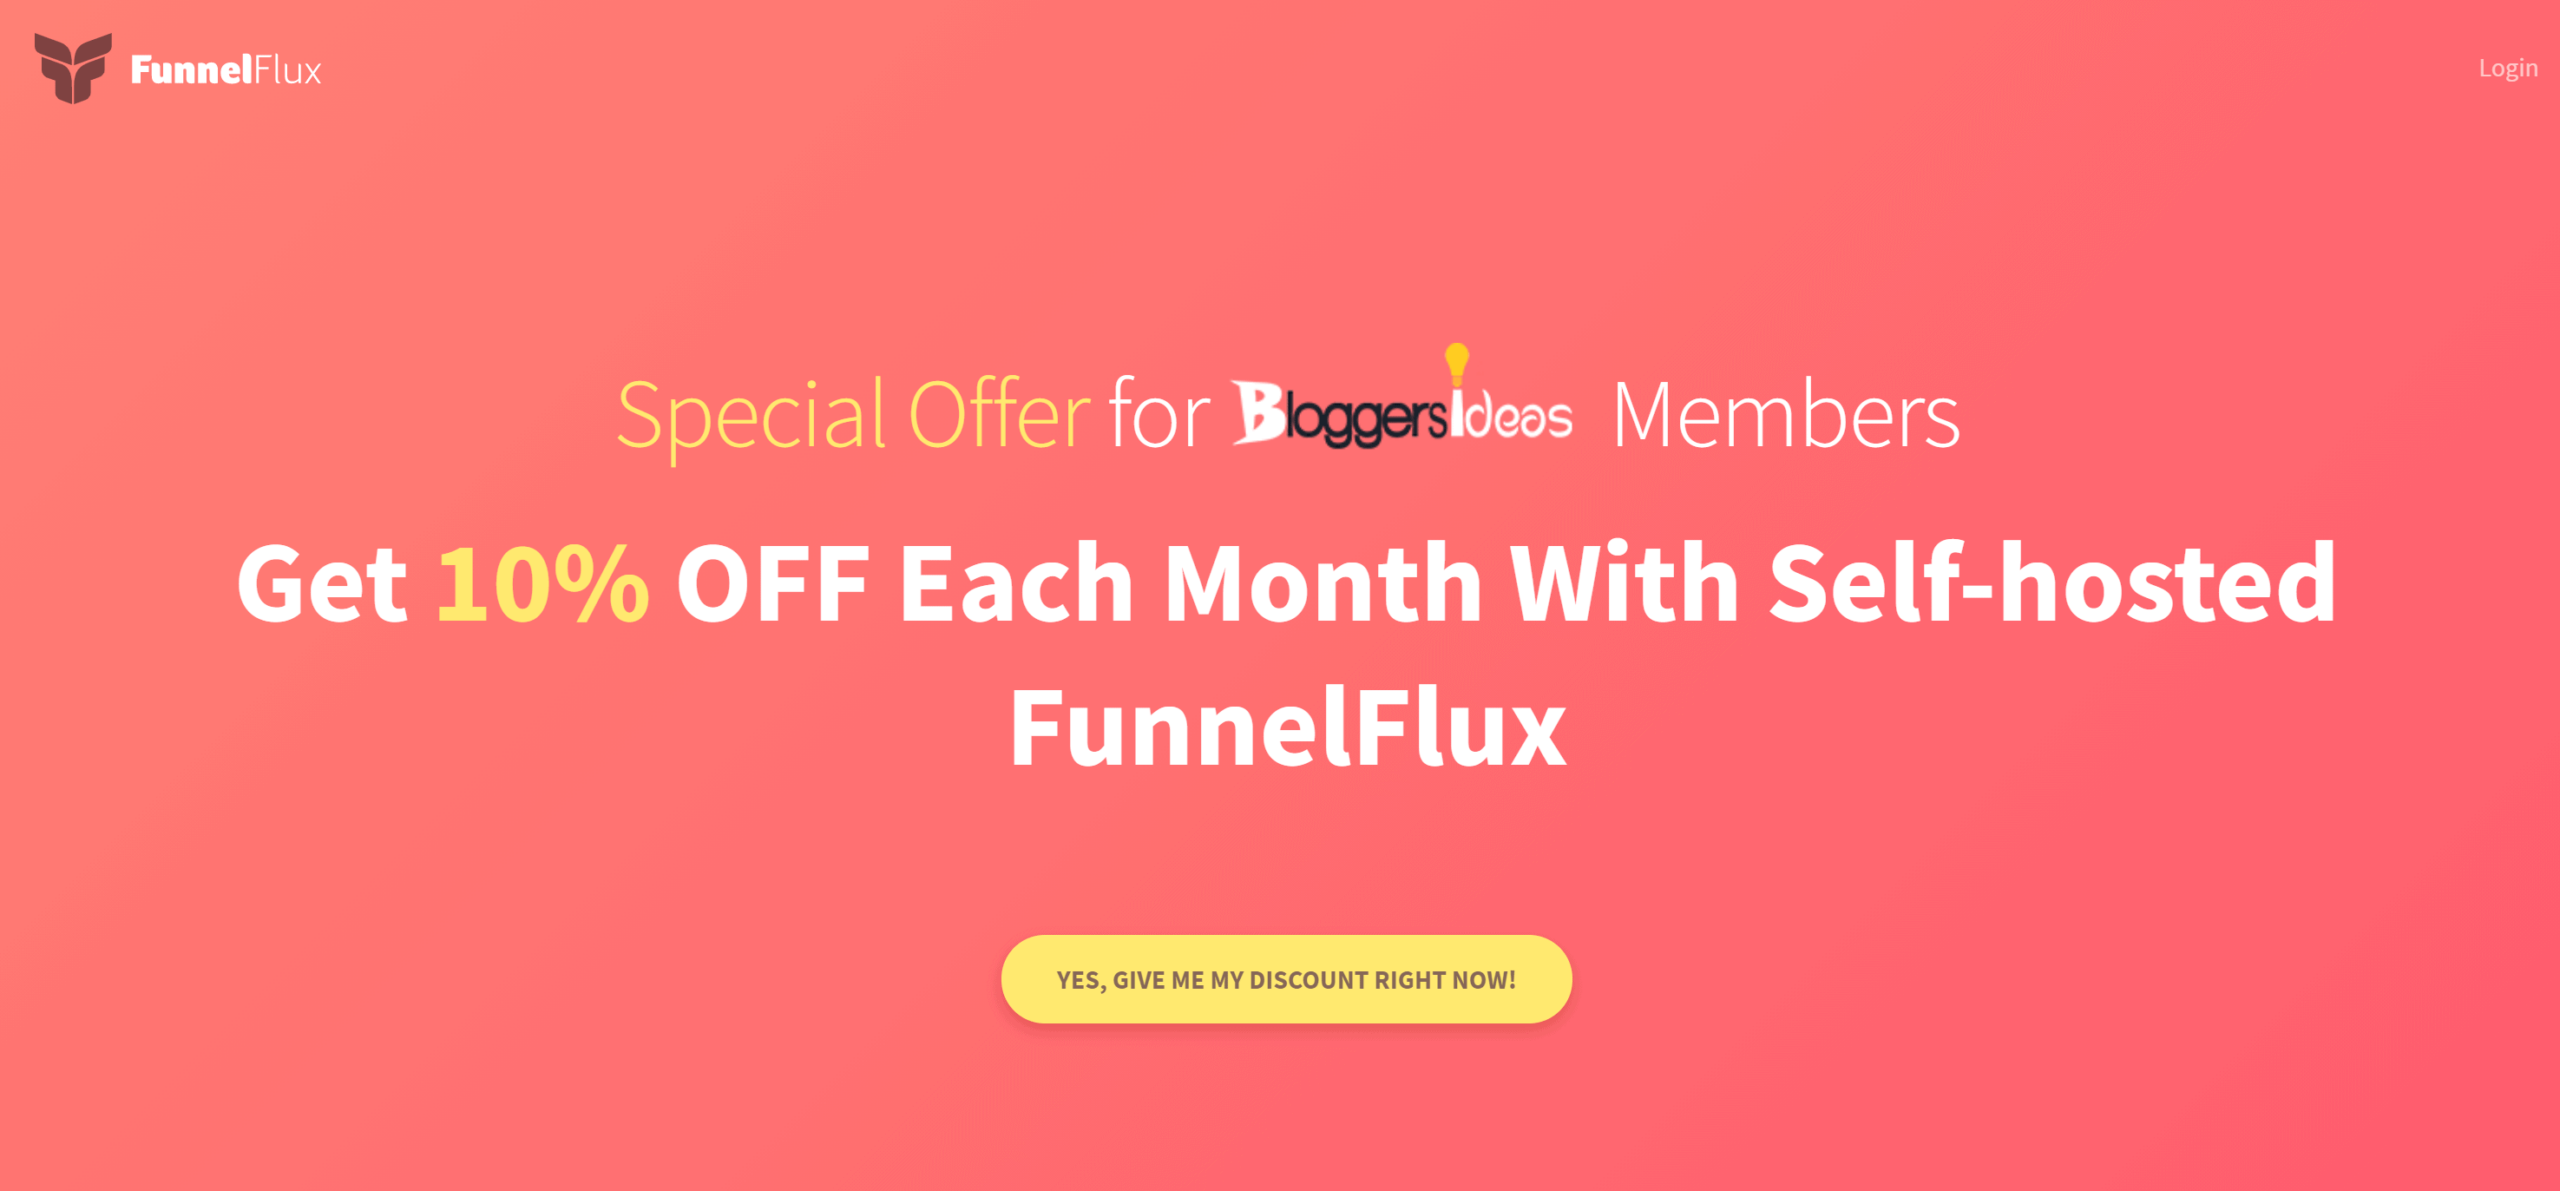 FunnelFlux Reviews